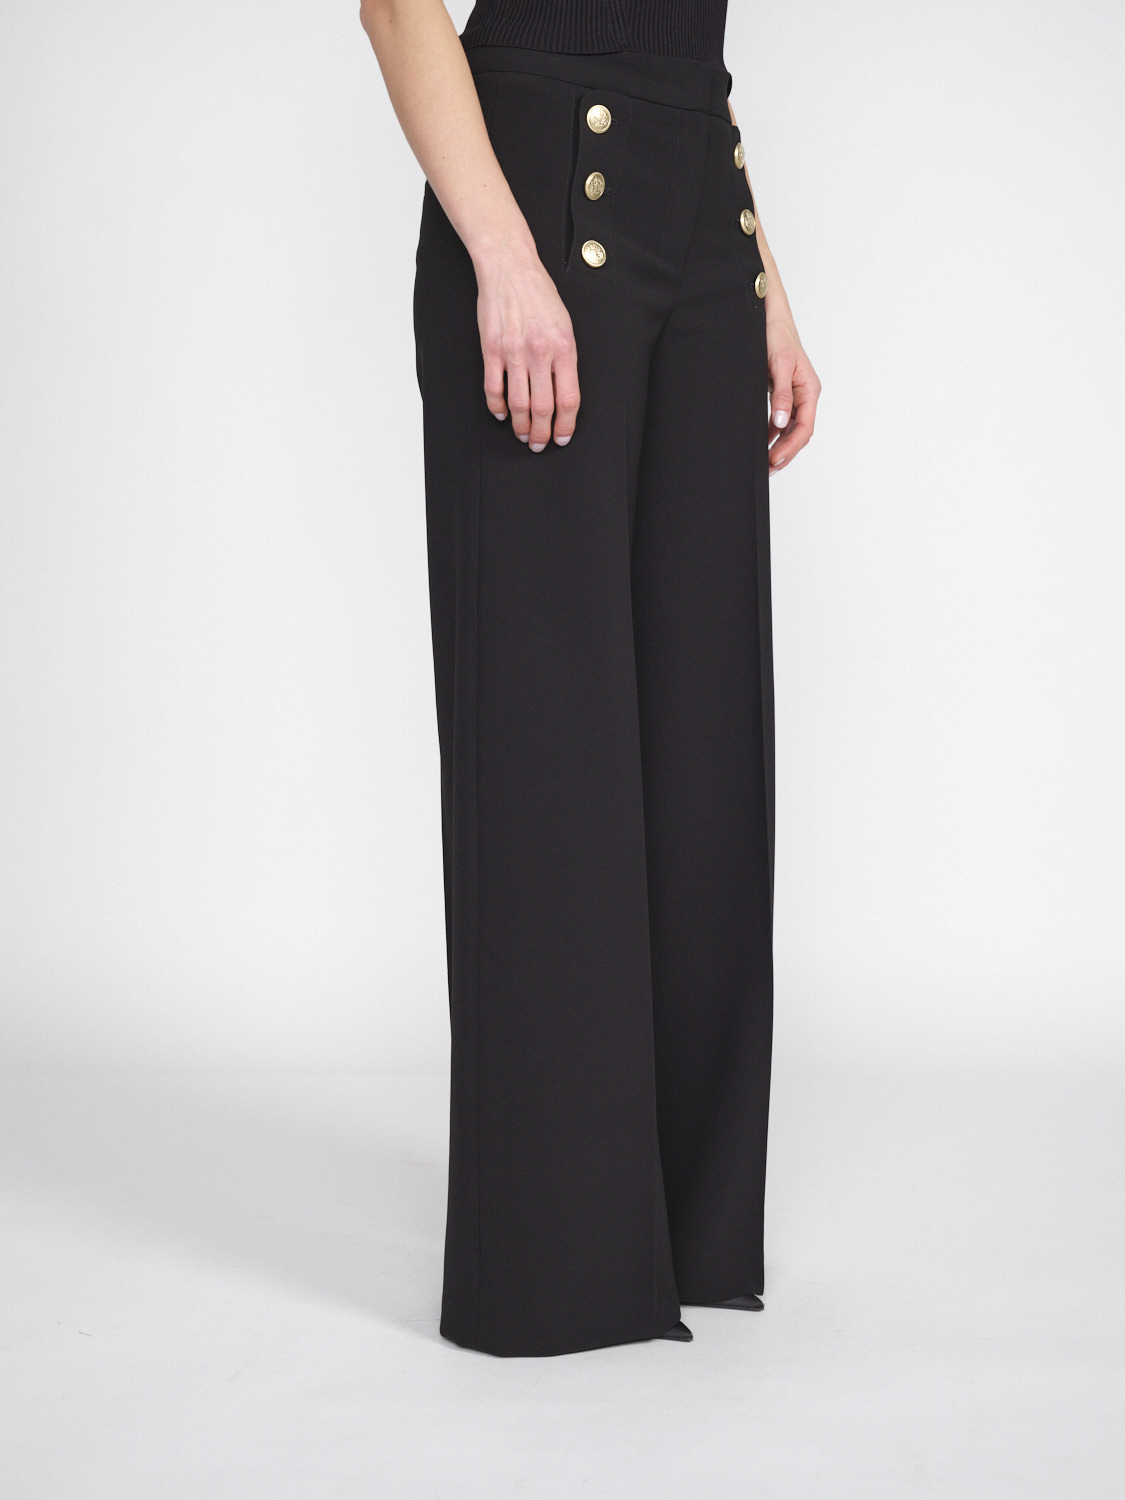 Seductive Bridget - Stretchy trousers with gold button details  black 38